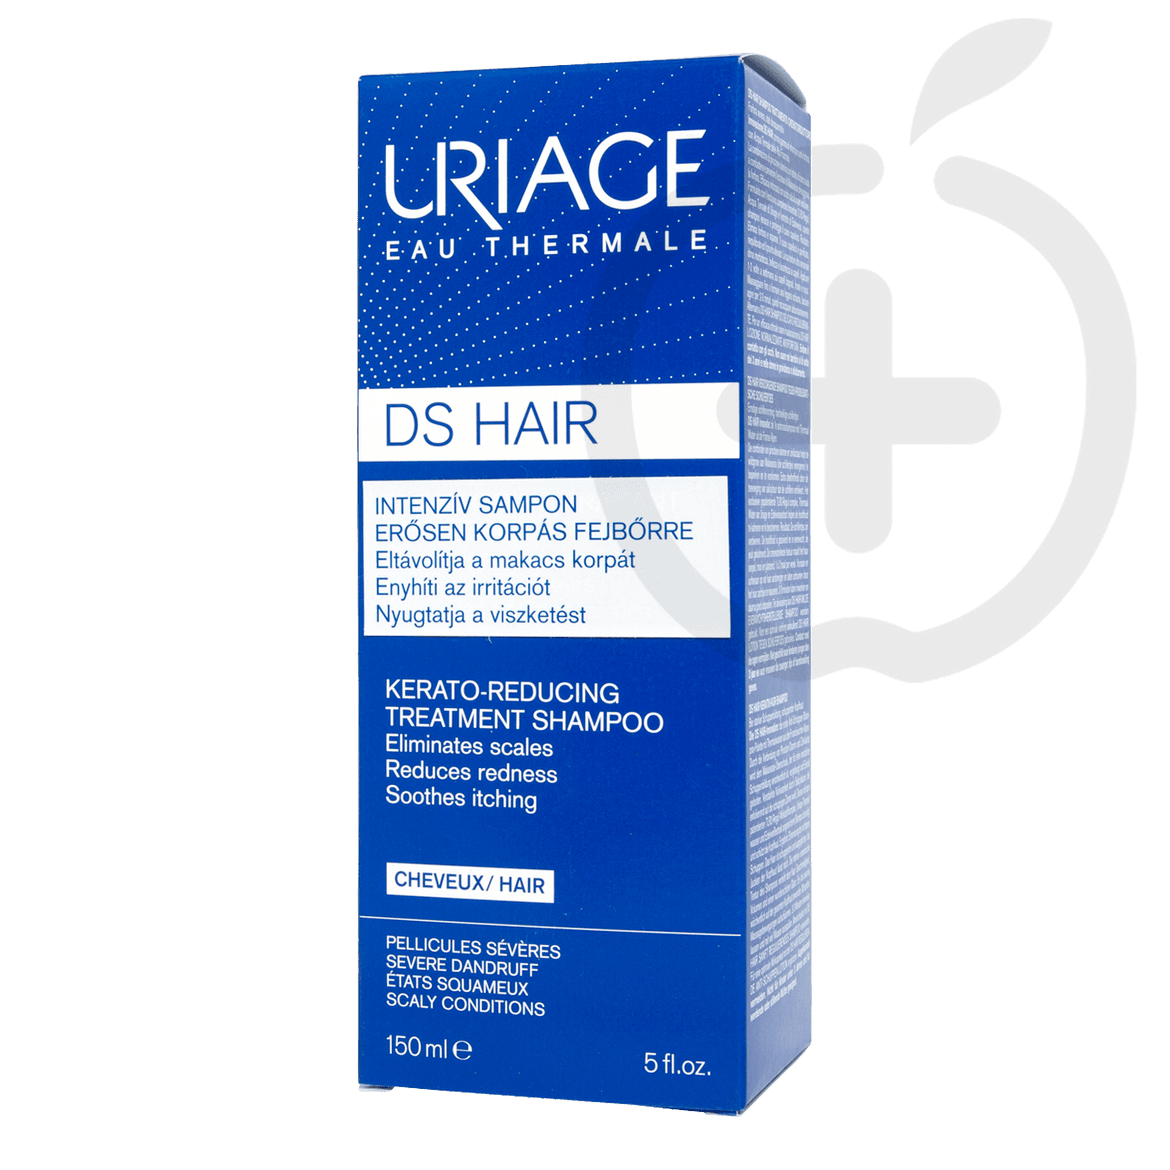 Uriage D.S. Hair sampon erősen korpás fejbőrre